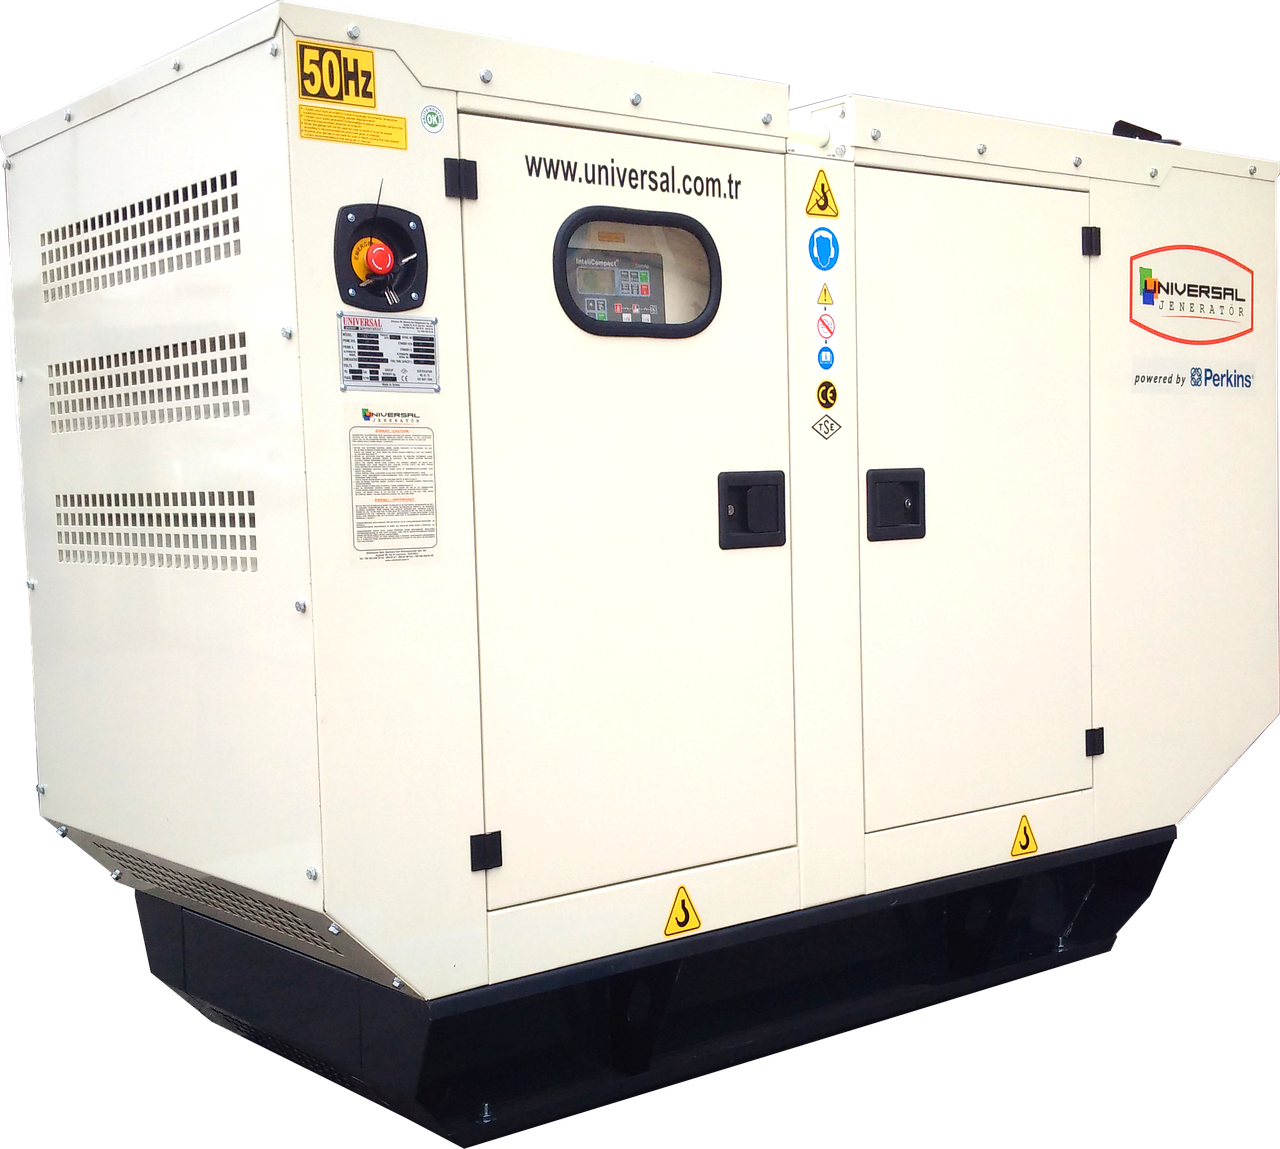 diesel generators generator izmit power systems free photo